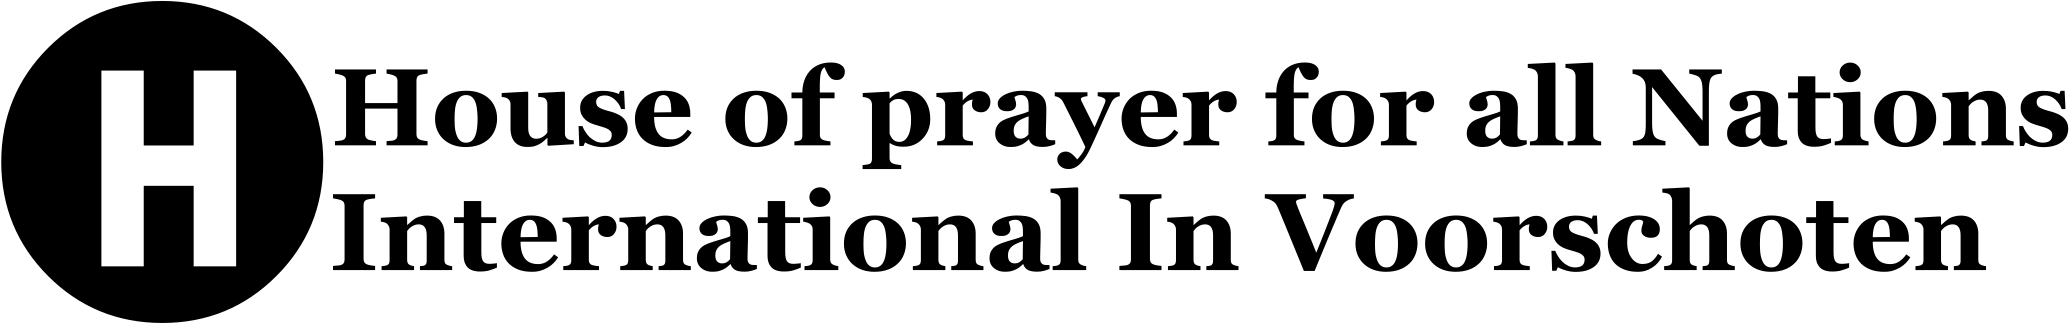 House of prayer for all nations international in Voorschoten